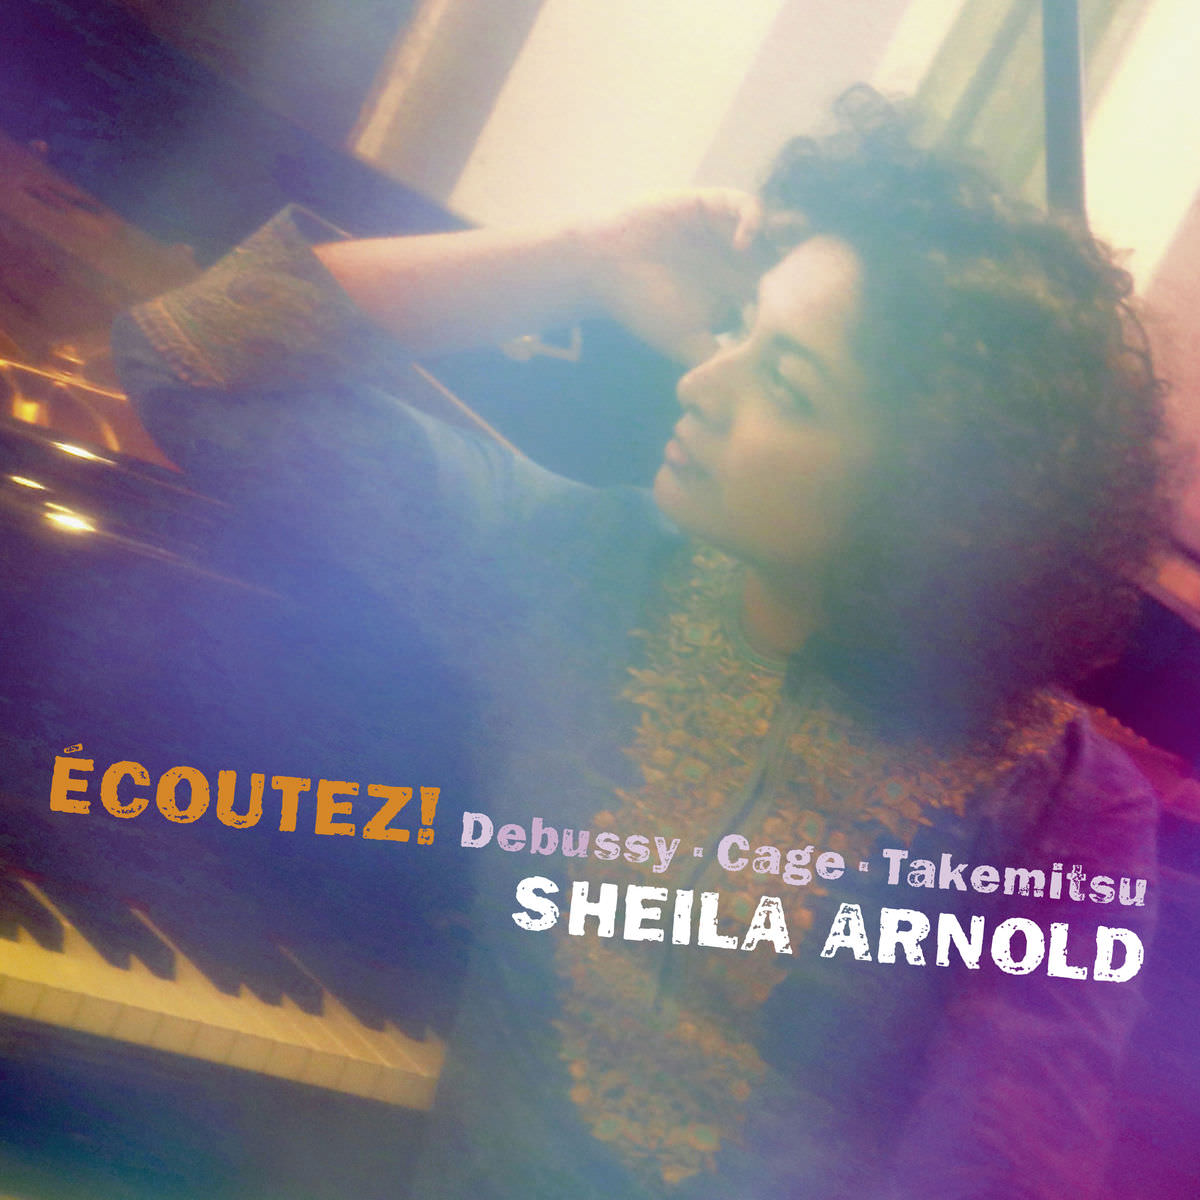 Sheila Arnold – ECOUTEZ! Debussy, Cage & Takemitsu (2018) [FLAC 24bit/48kHz]